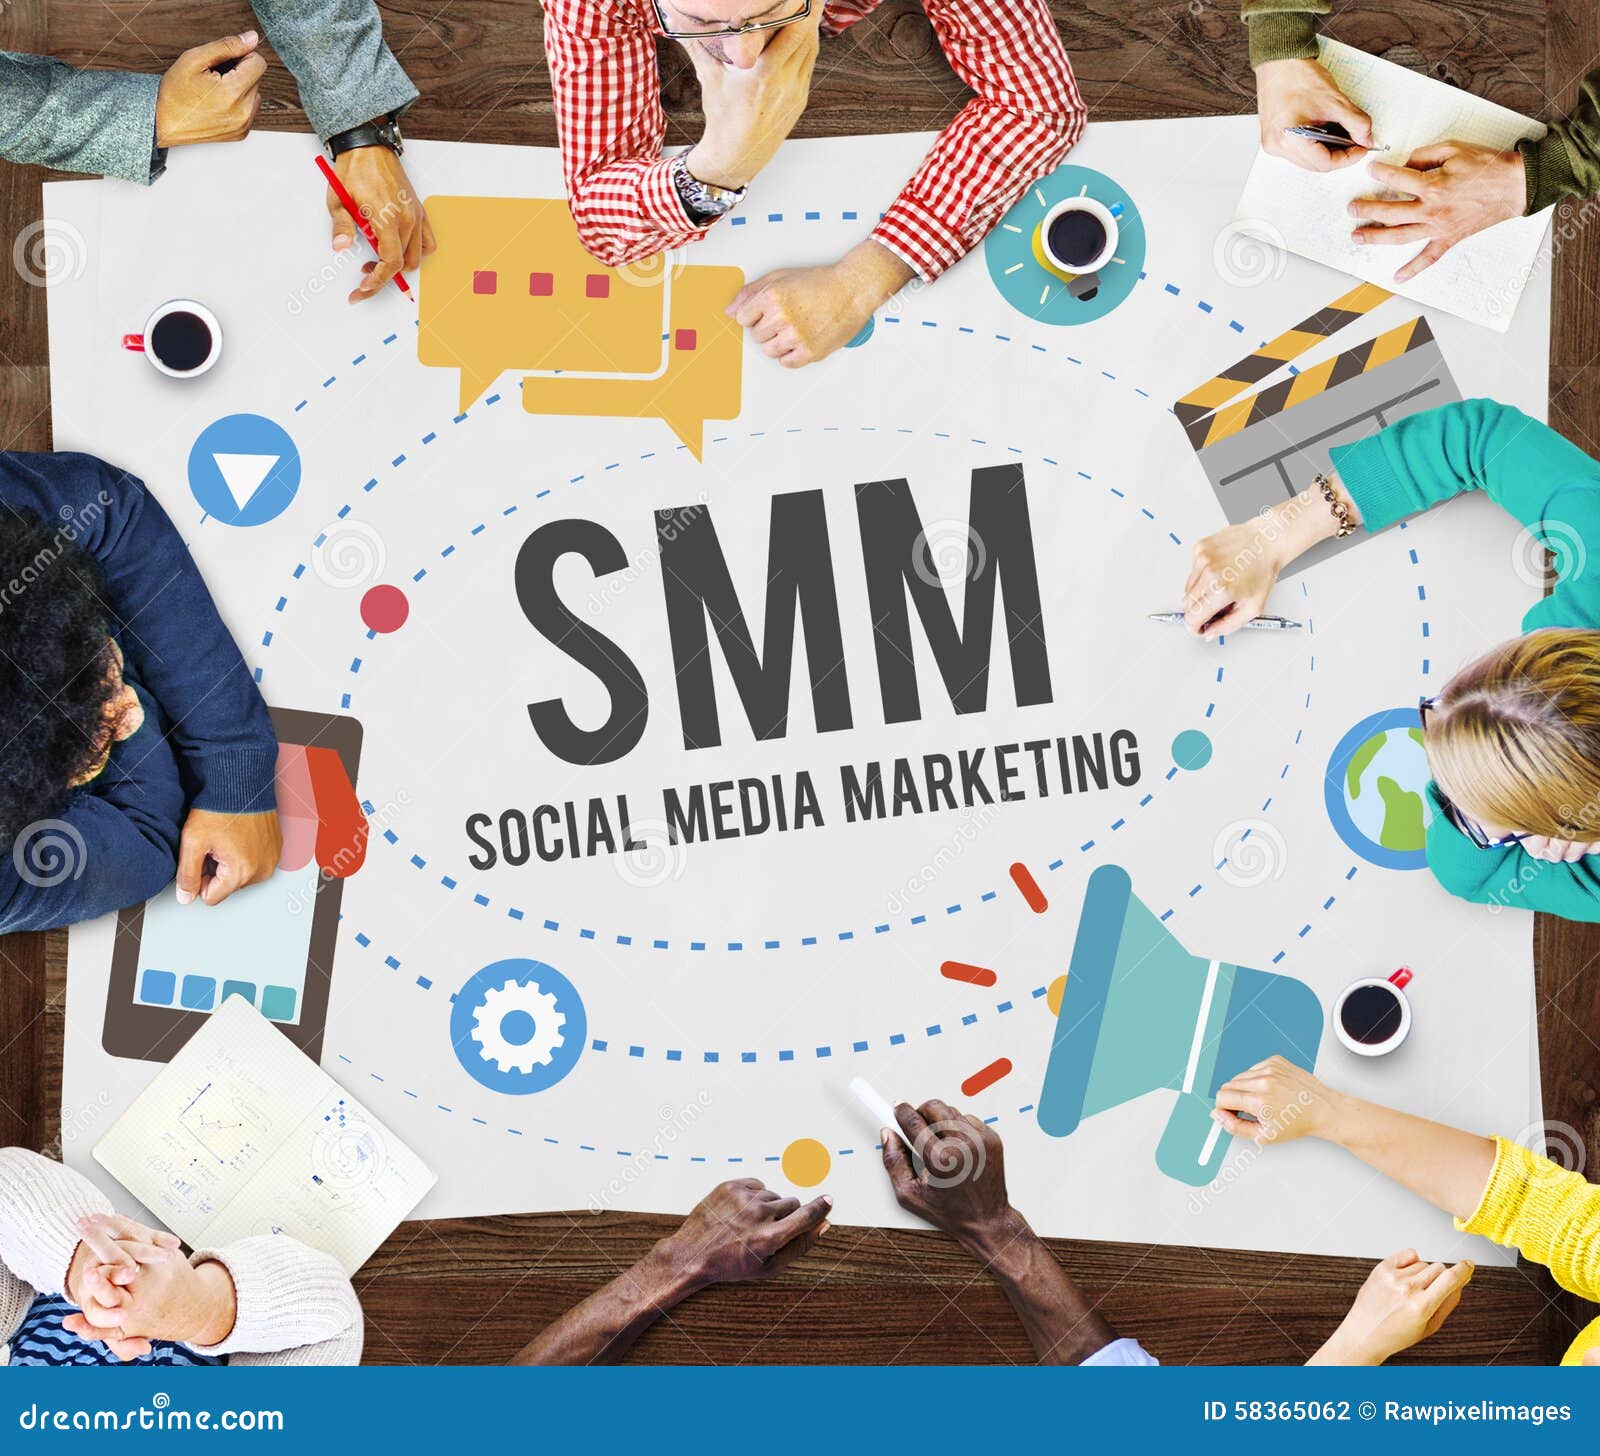 social media marketing online business concept